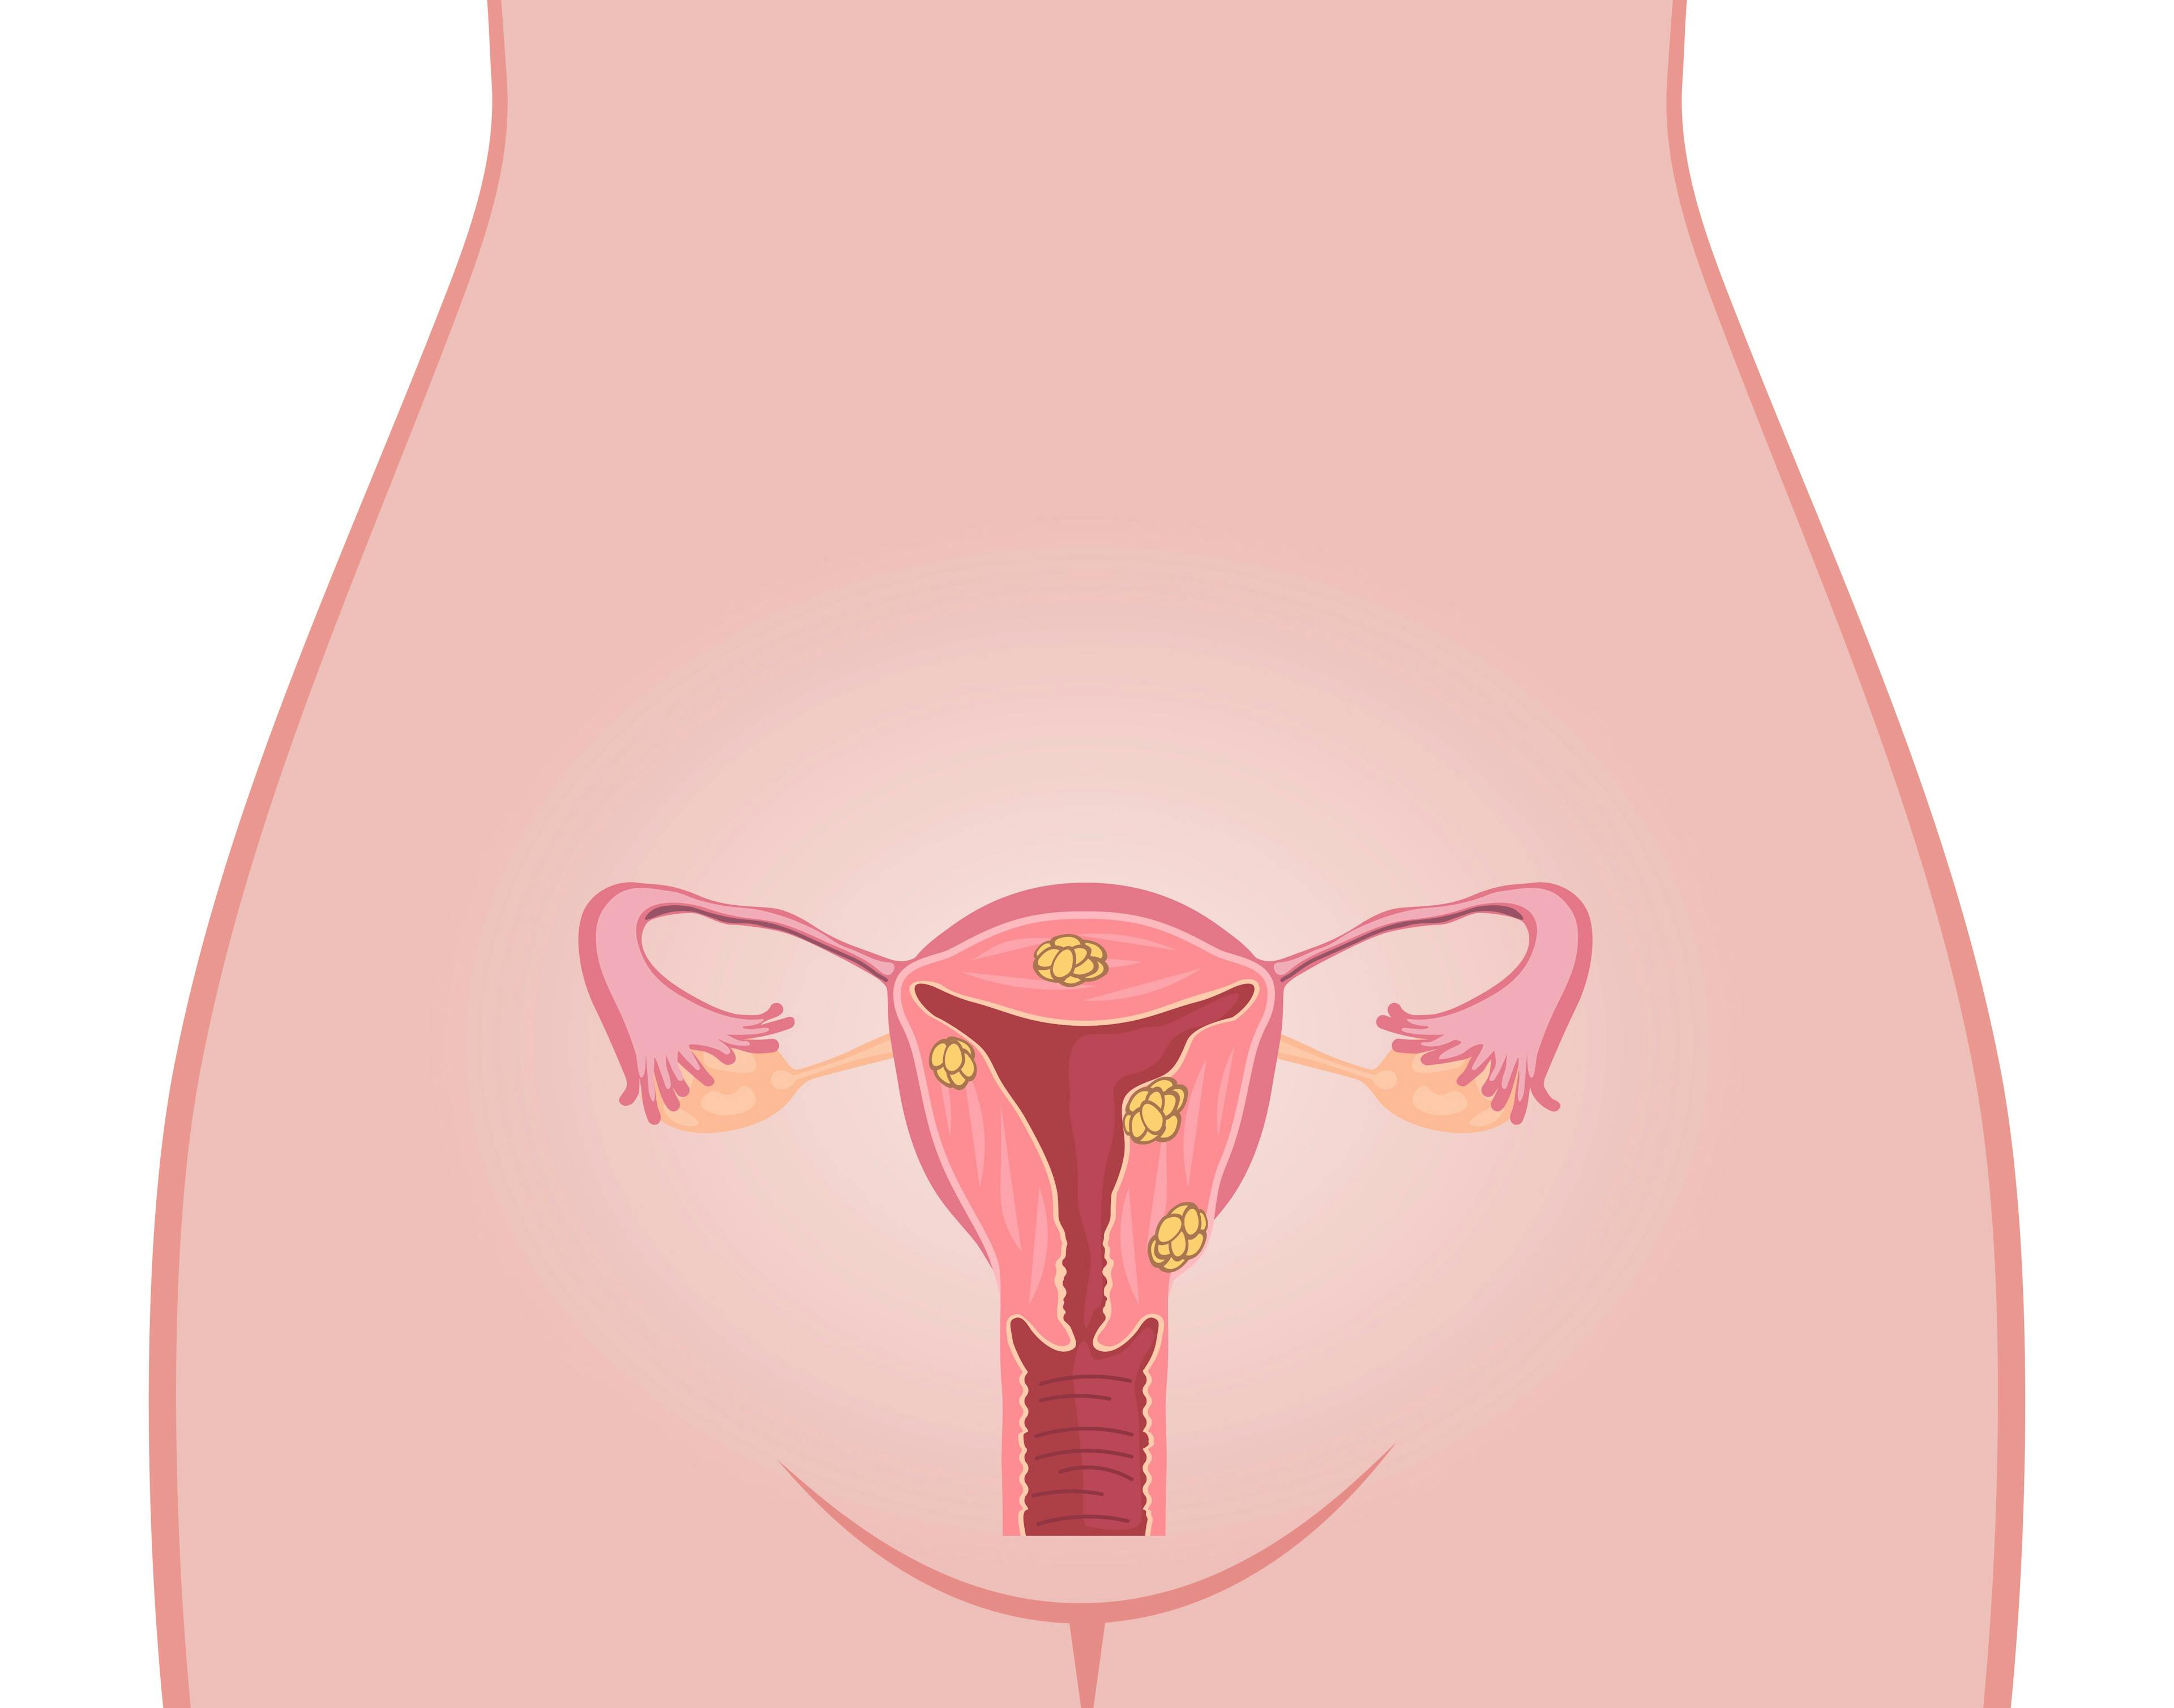 Checkpoint Blockade Drives Progress in Endometrial Cancer Treatment